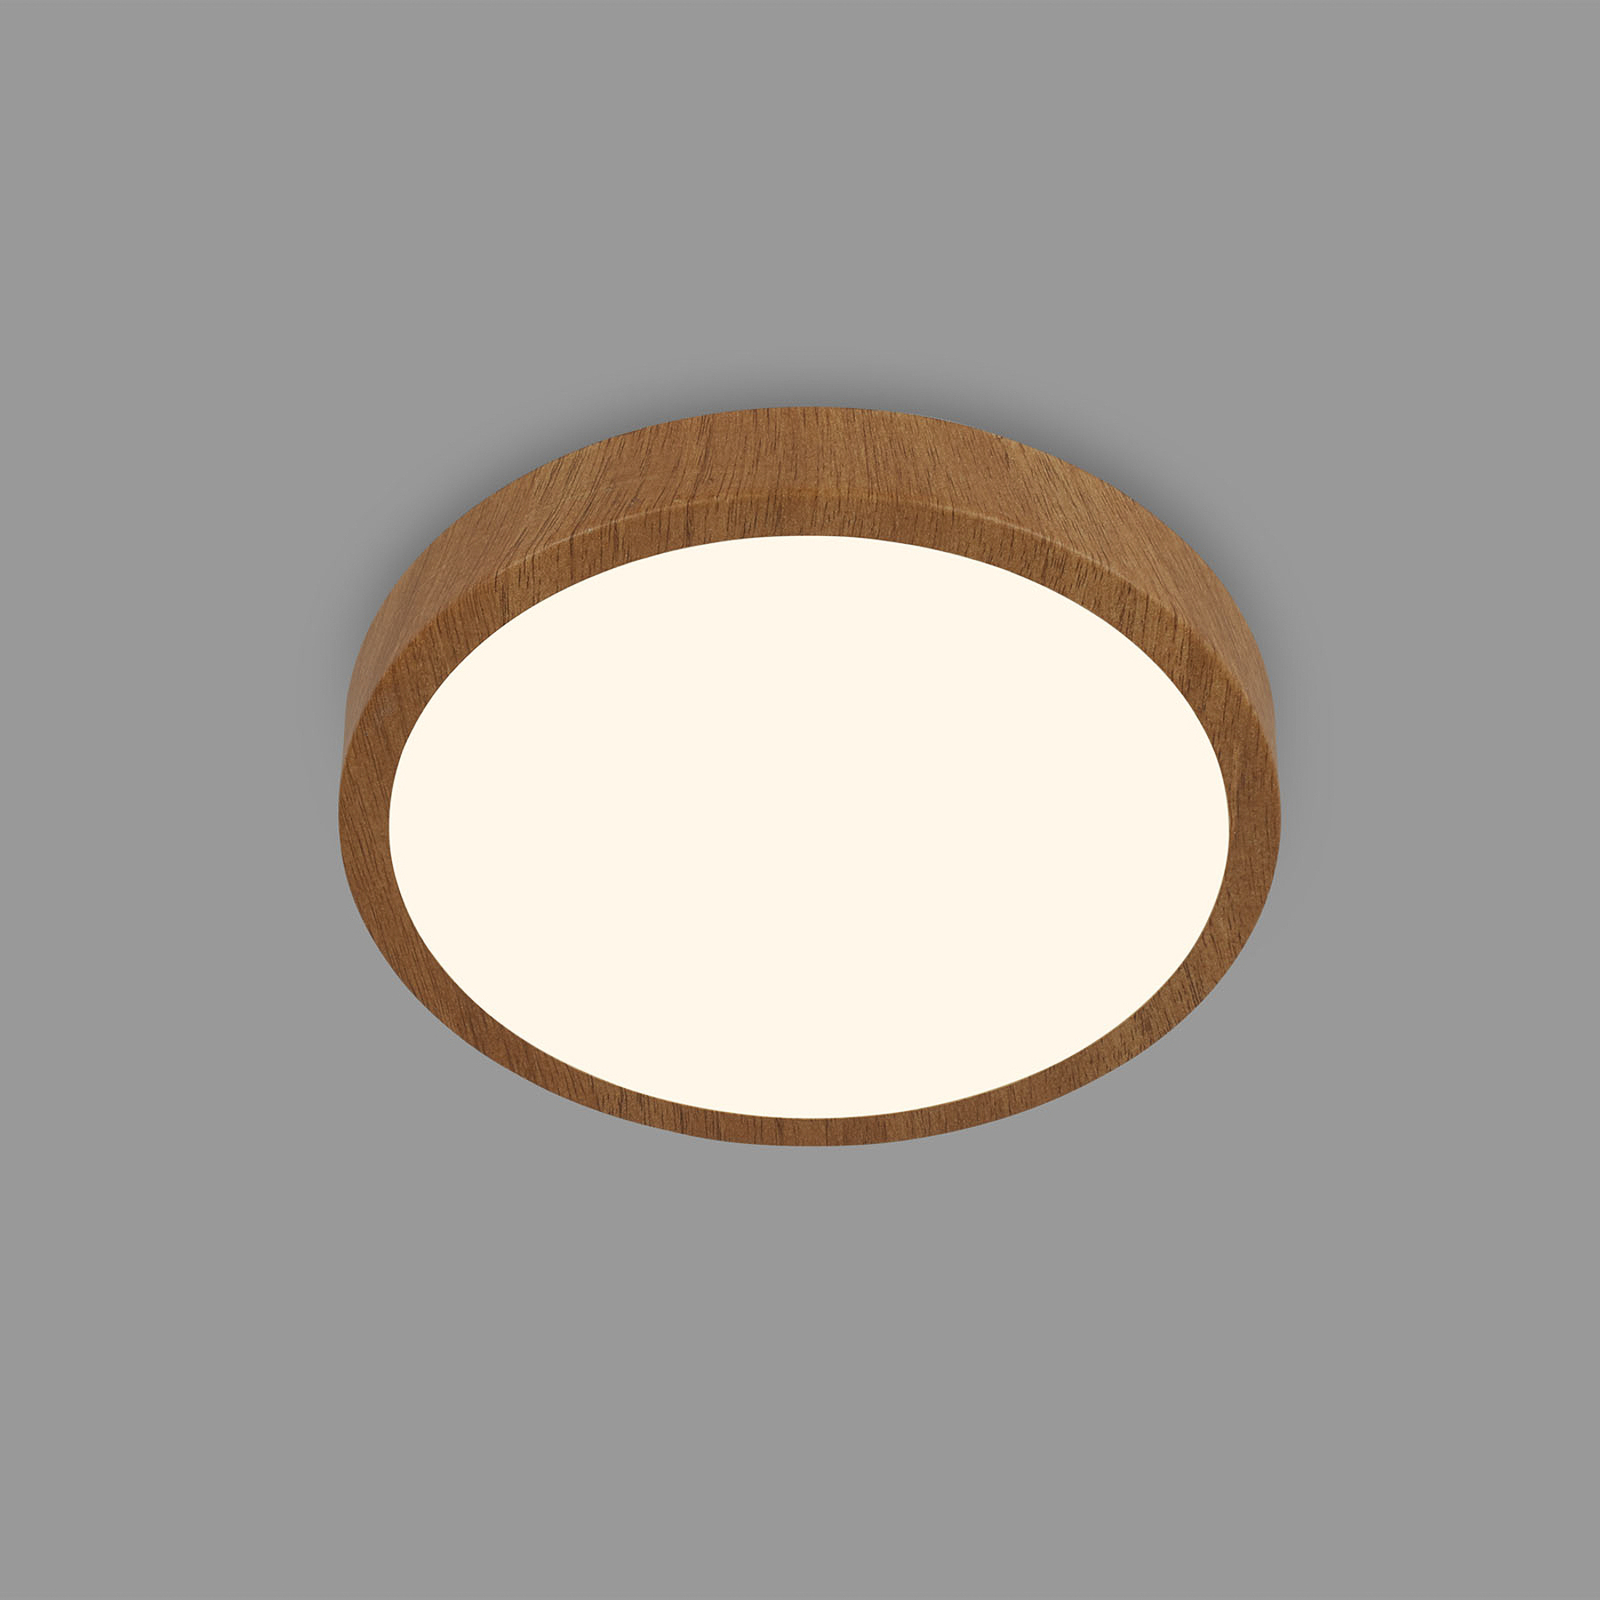 LED stropné svietidlo Runa Wood wood look 3 000 K Ø38cm